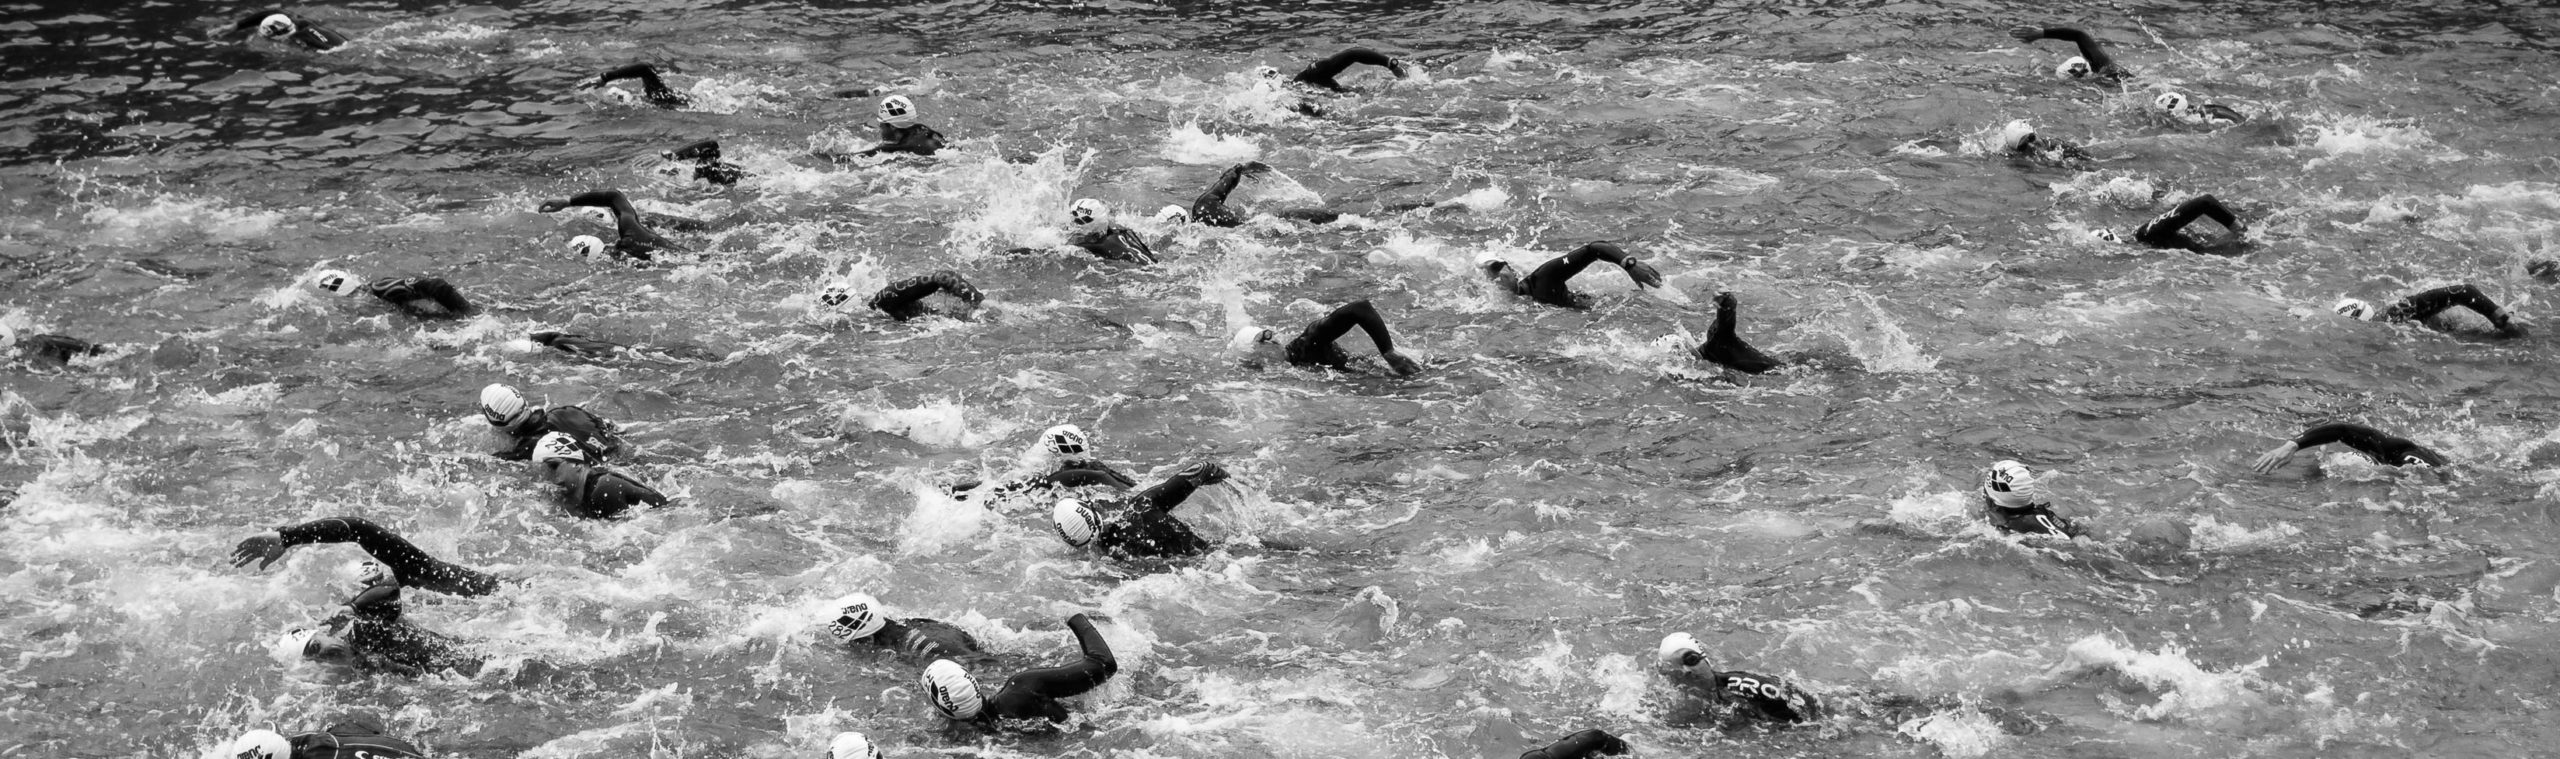 triathlon-bordeaux-metropole-natation